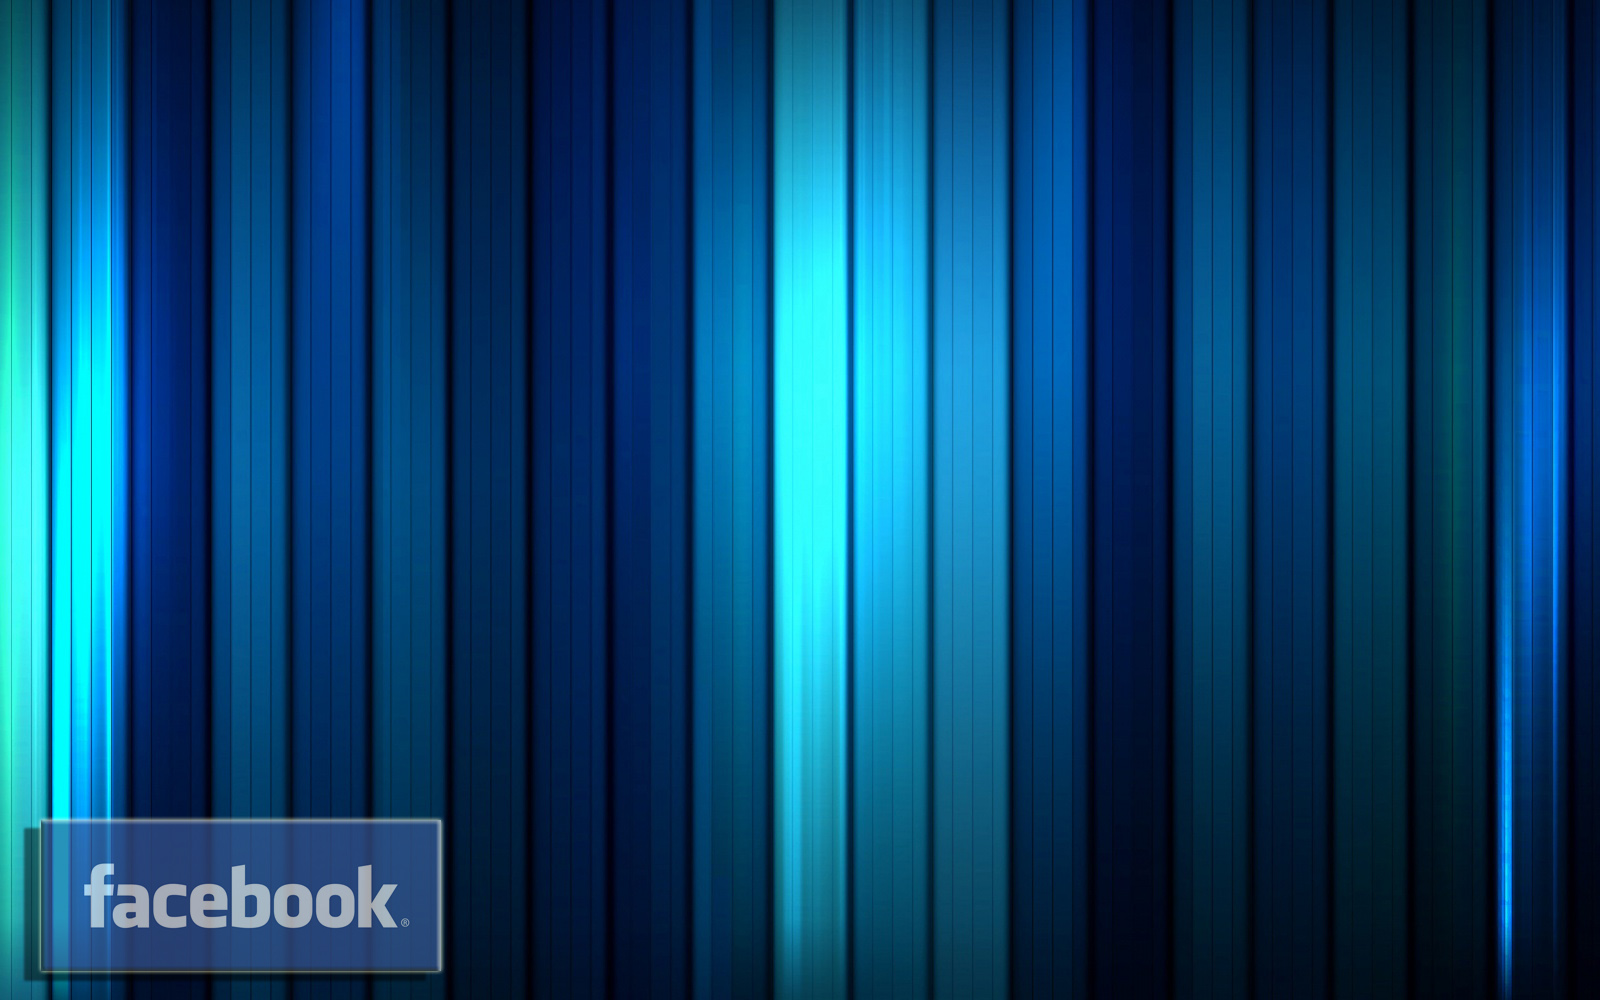 facebook wallpaper hd,blau,kobaltblau,elektrisches blau,türkis,aqua